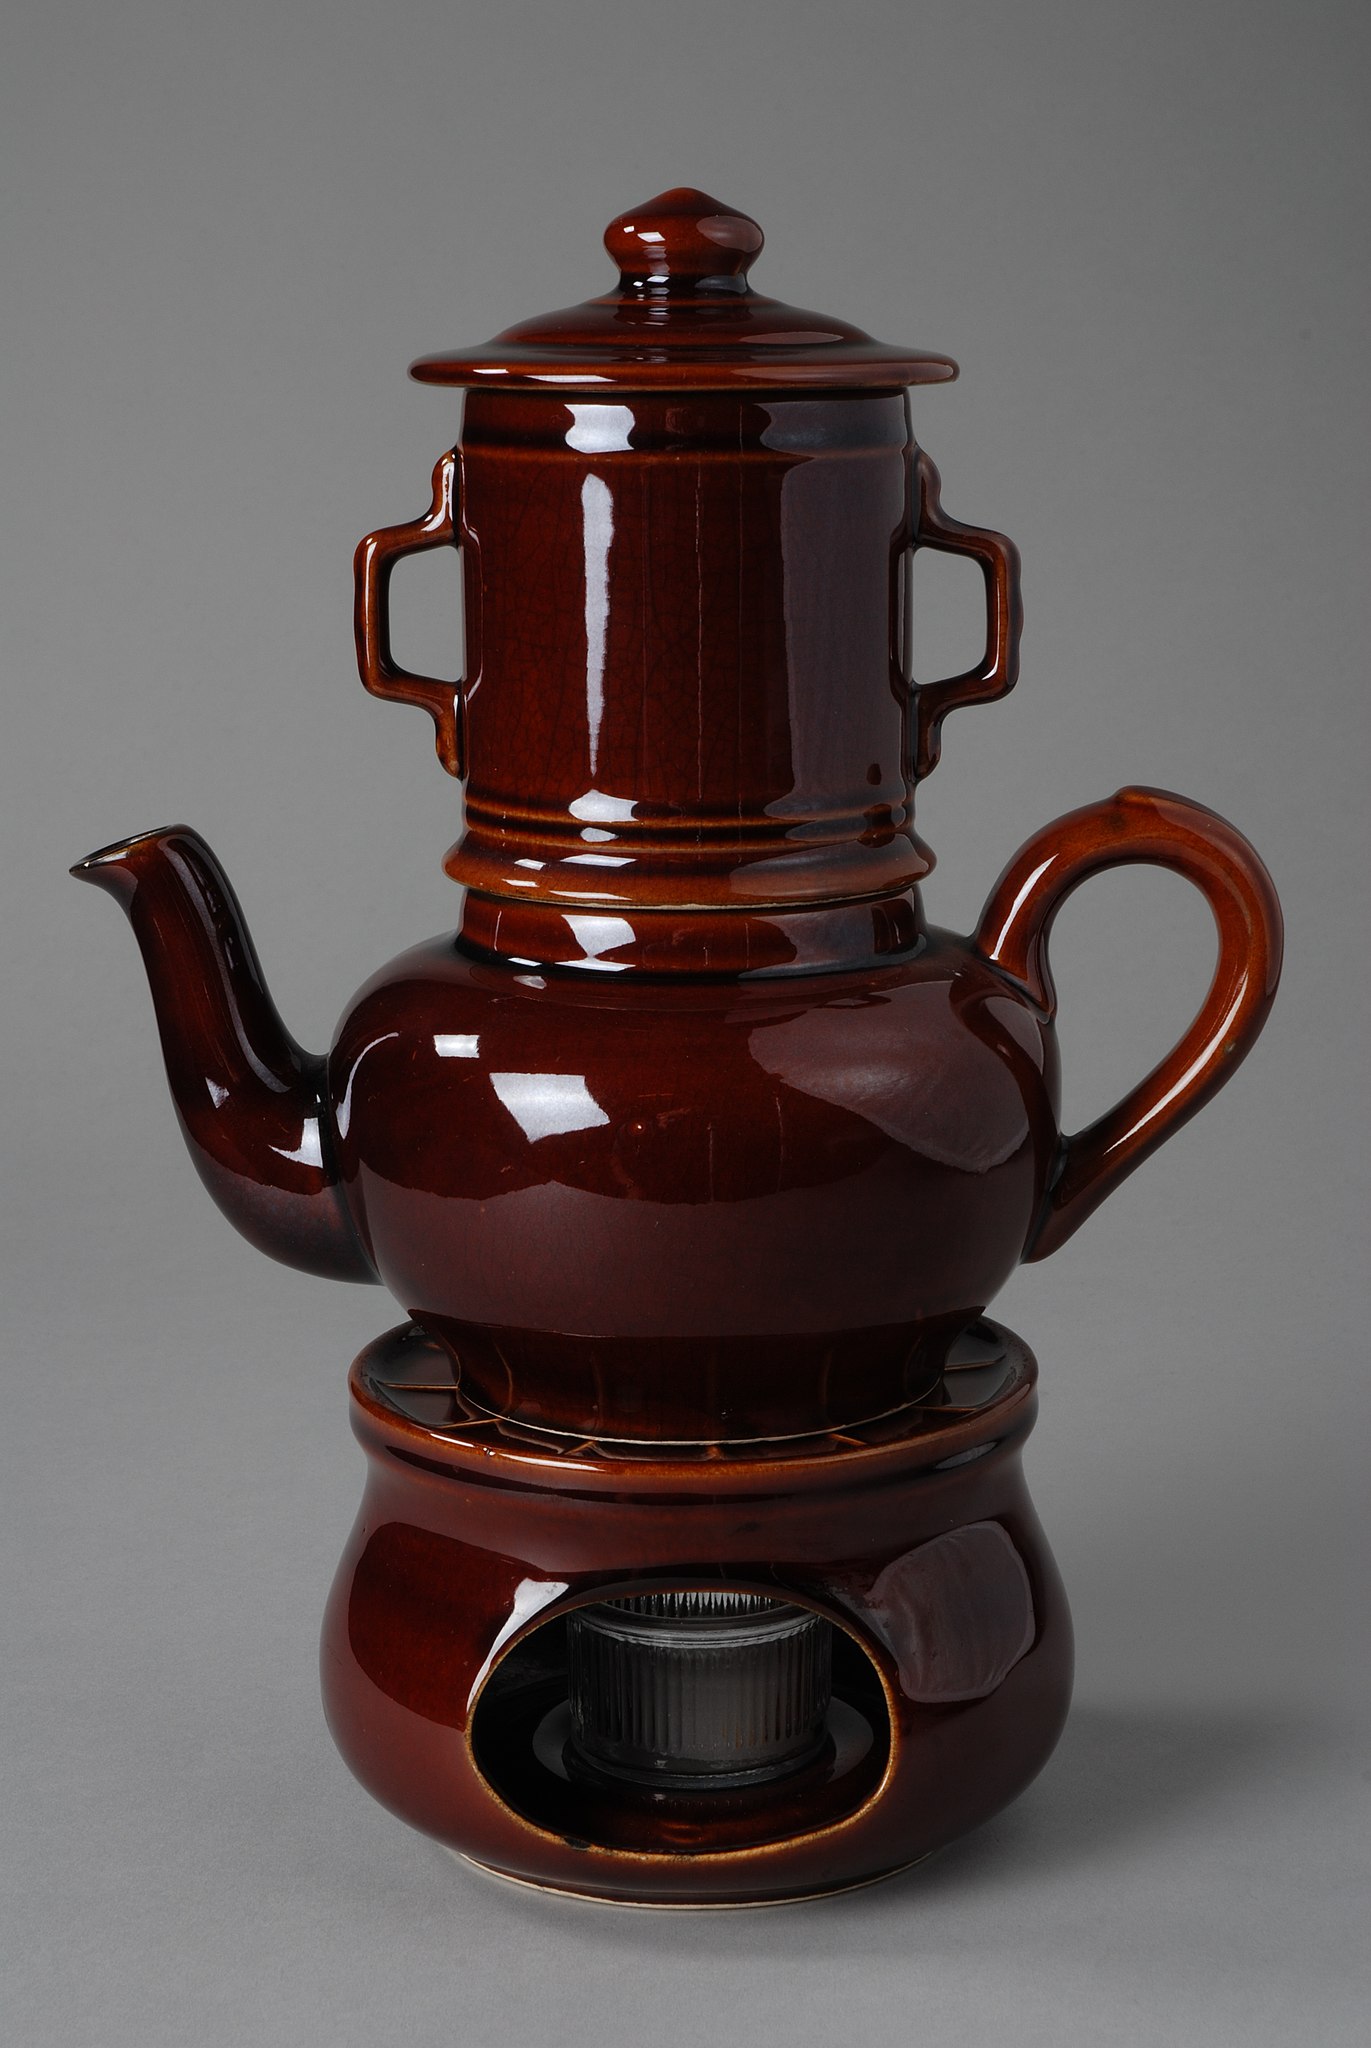 File:Bruine koffiepot met filter op van objectnr 90824-A-F(2).JPG - Wikimedia Commons